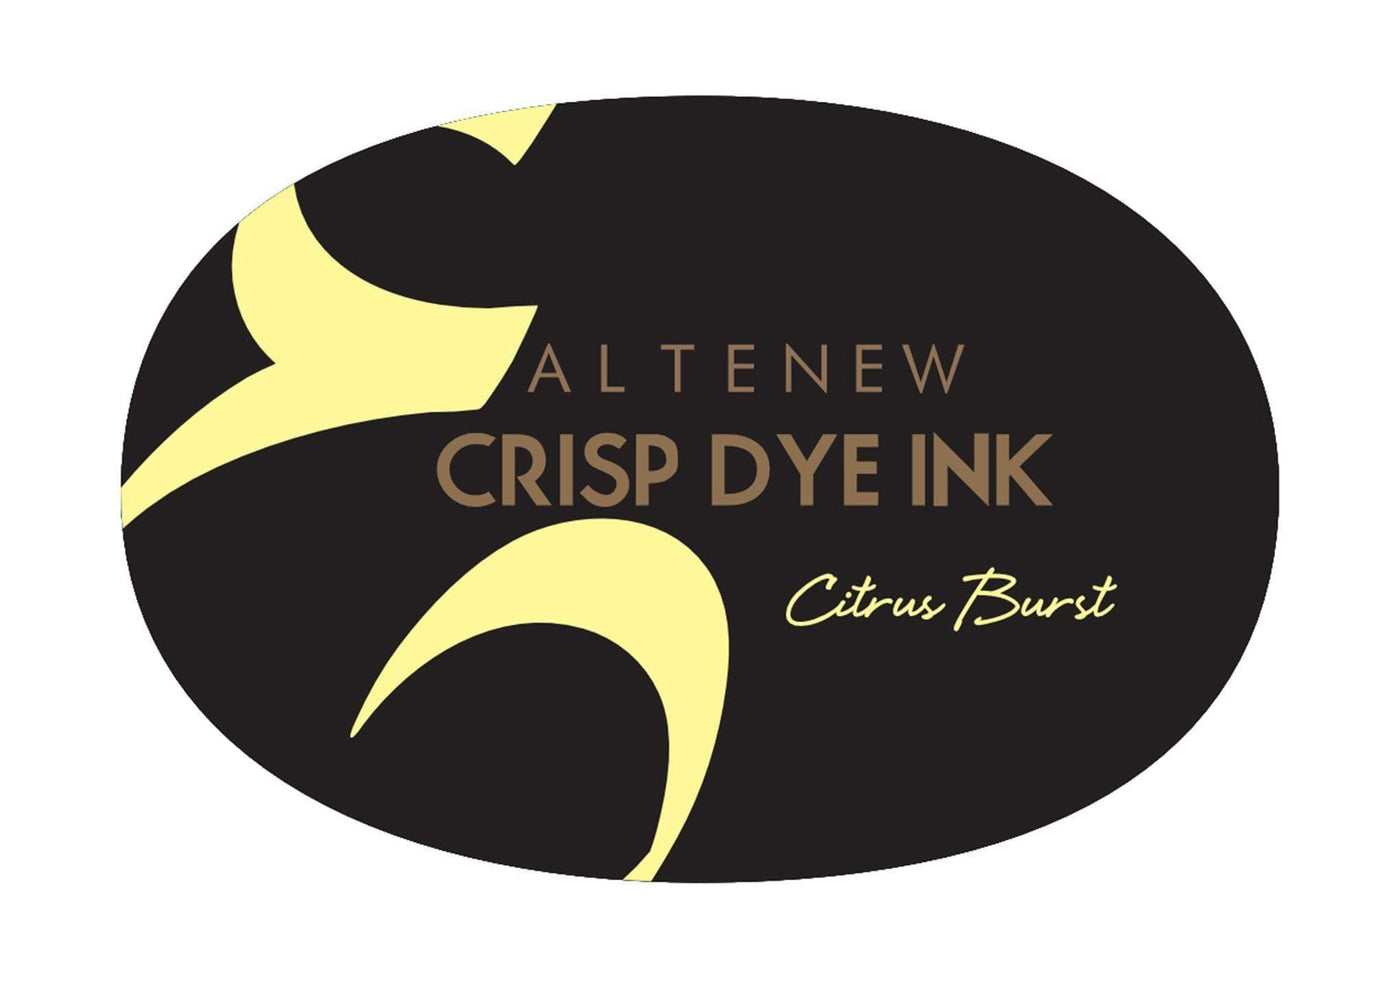 Stewart Superior Inks Citrus Burst Crisp Dye Ink